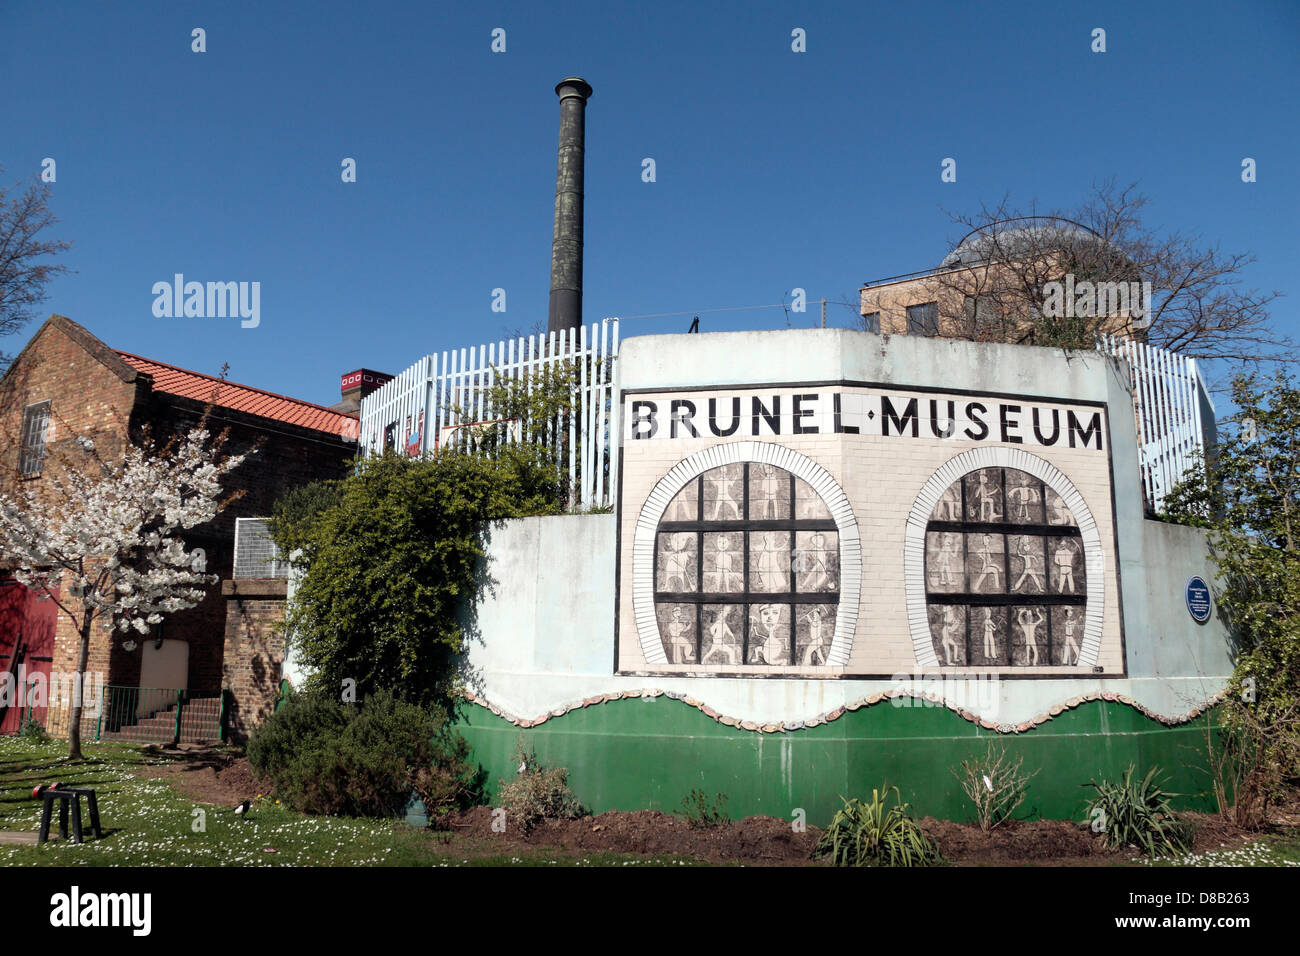 The Brunel Museum, Rotherhithe, London, UK. Stock Photo